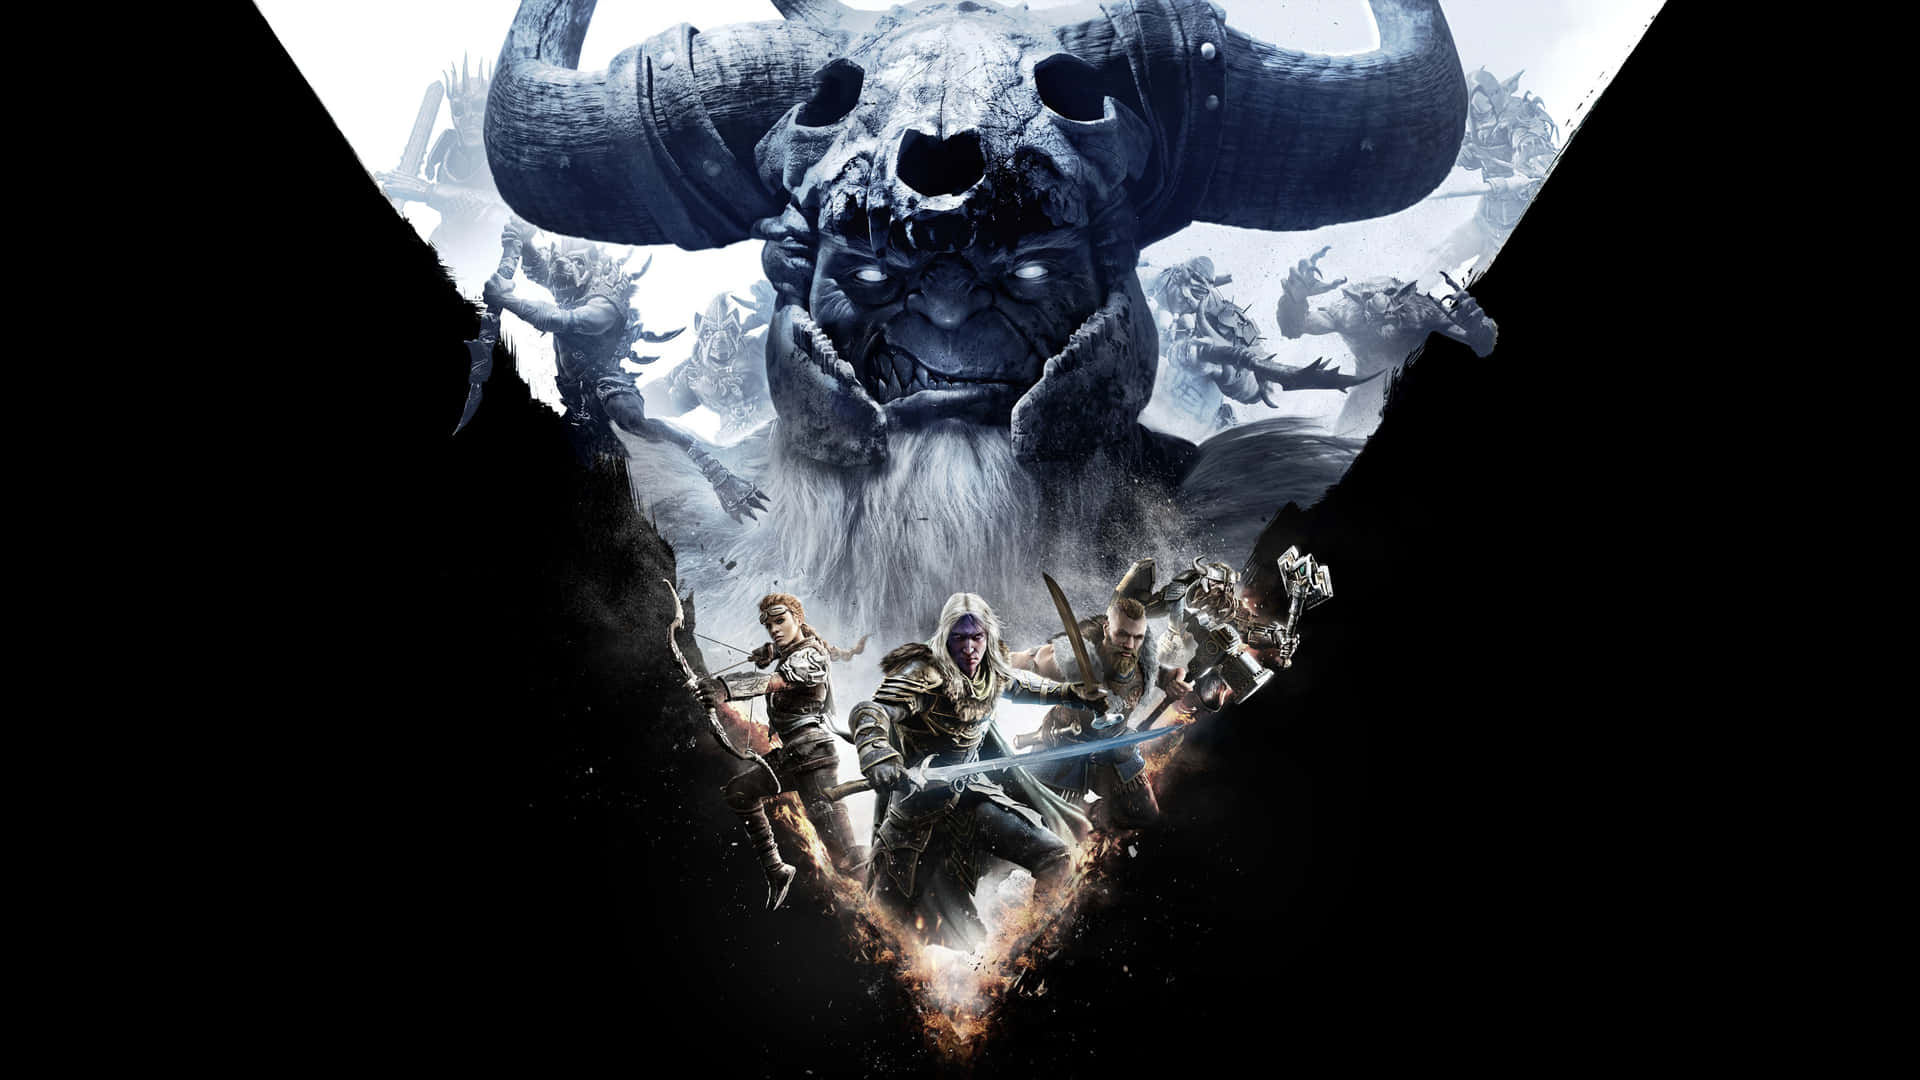 Dark Alliance - Epic Game Action Scene Wallpaper